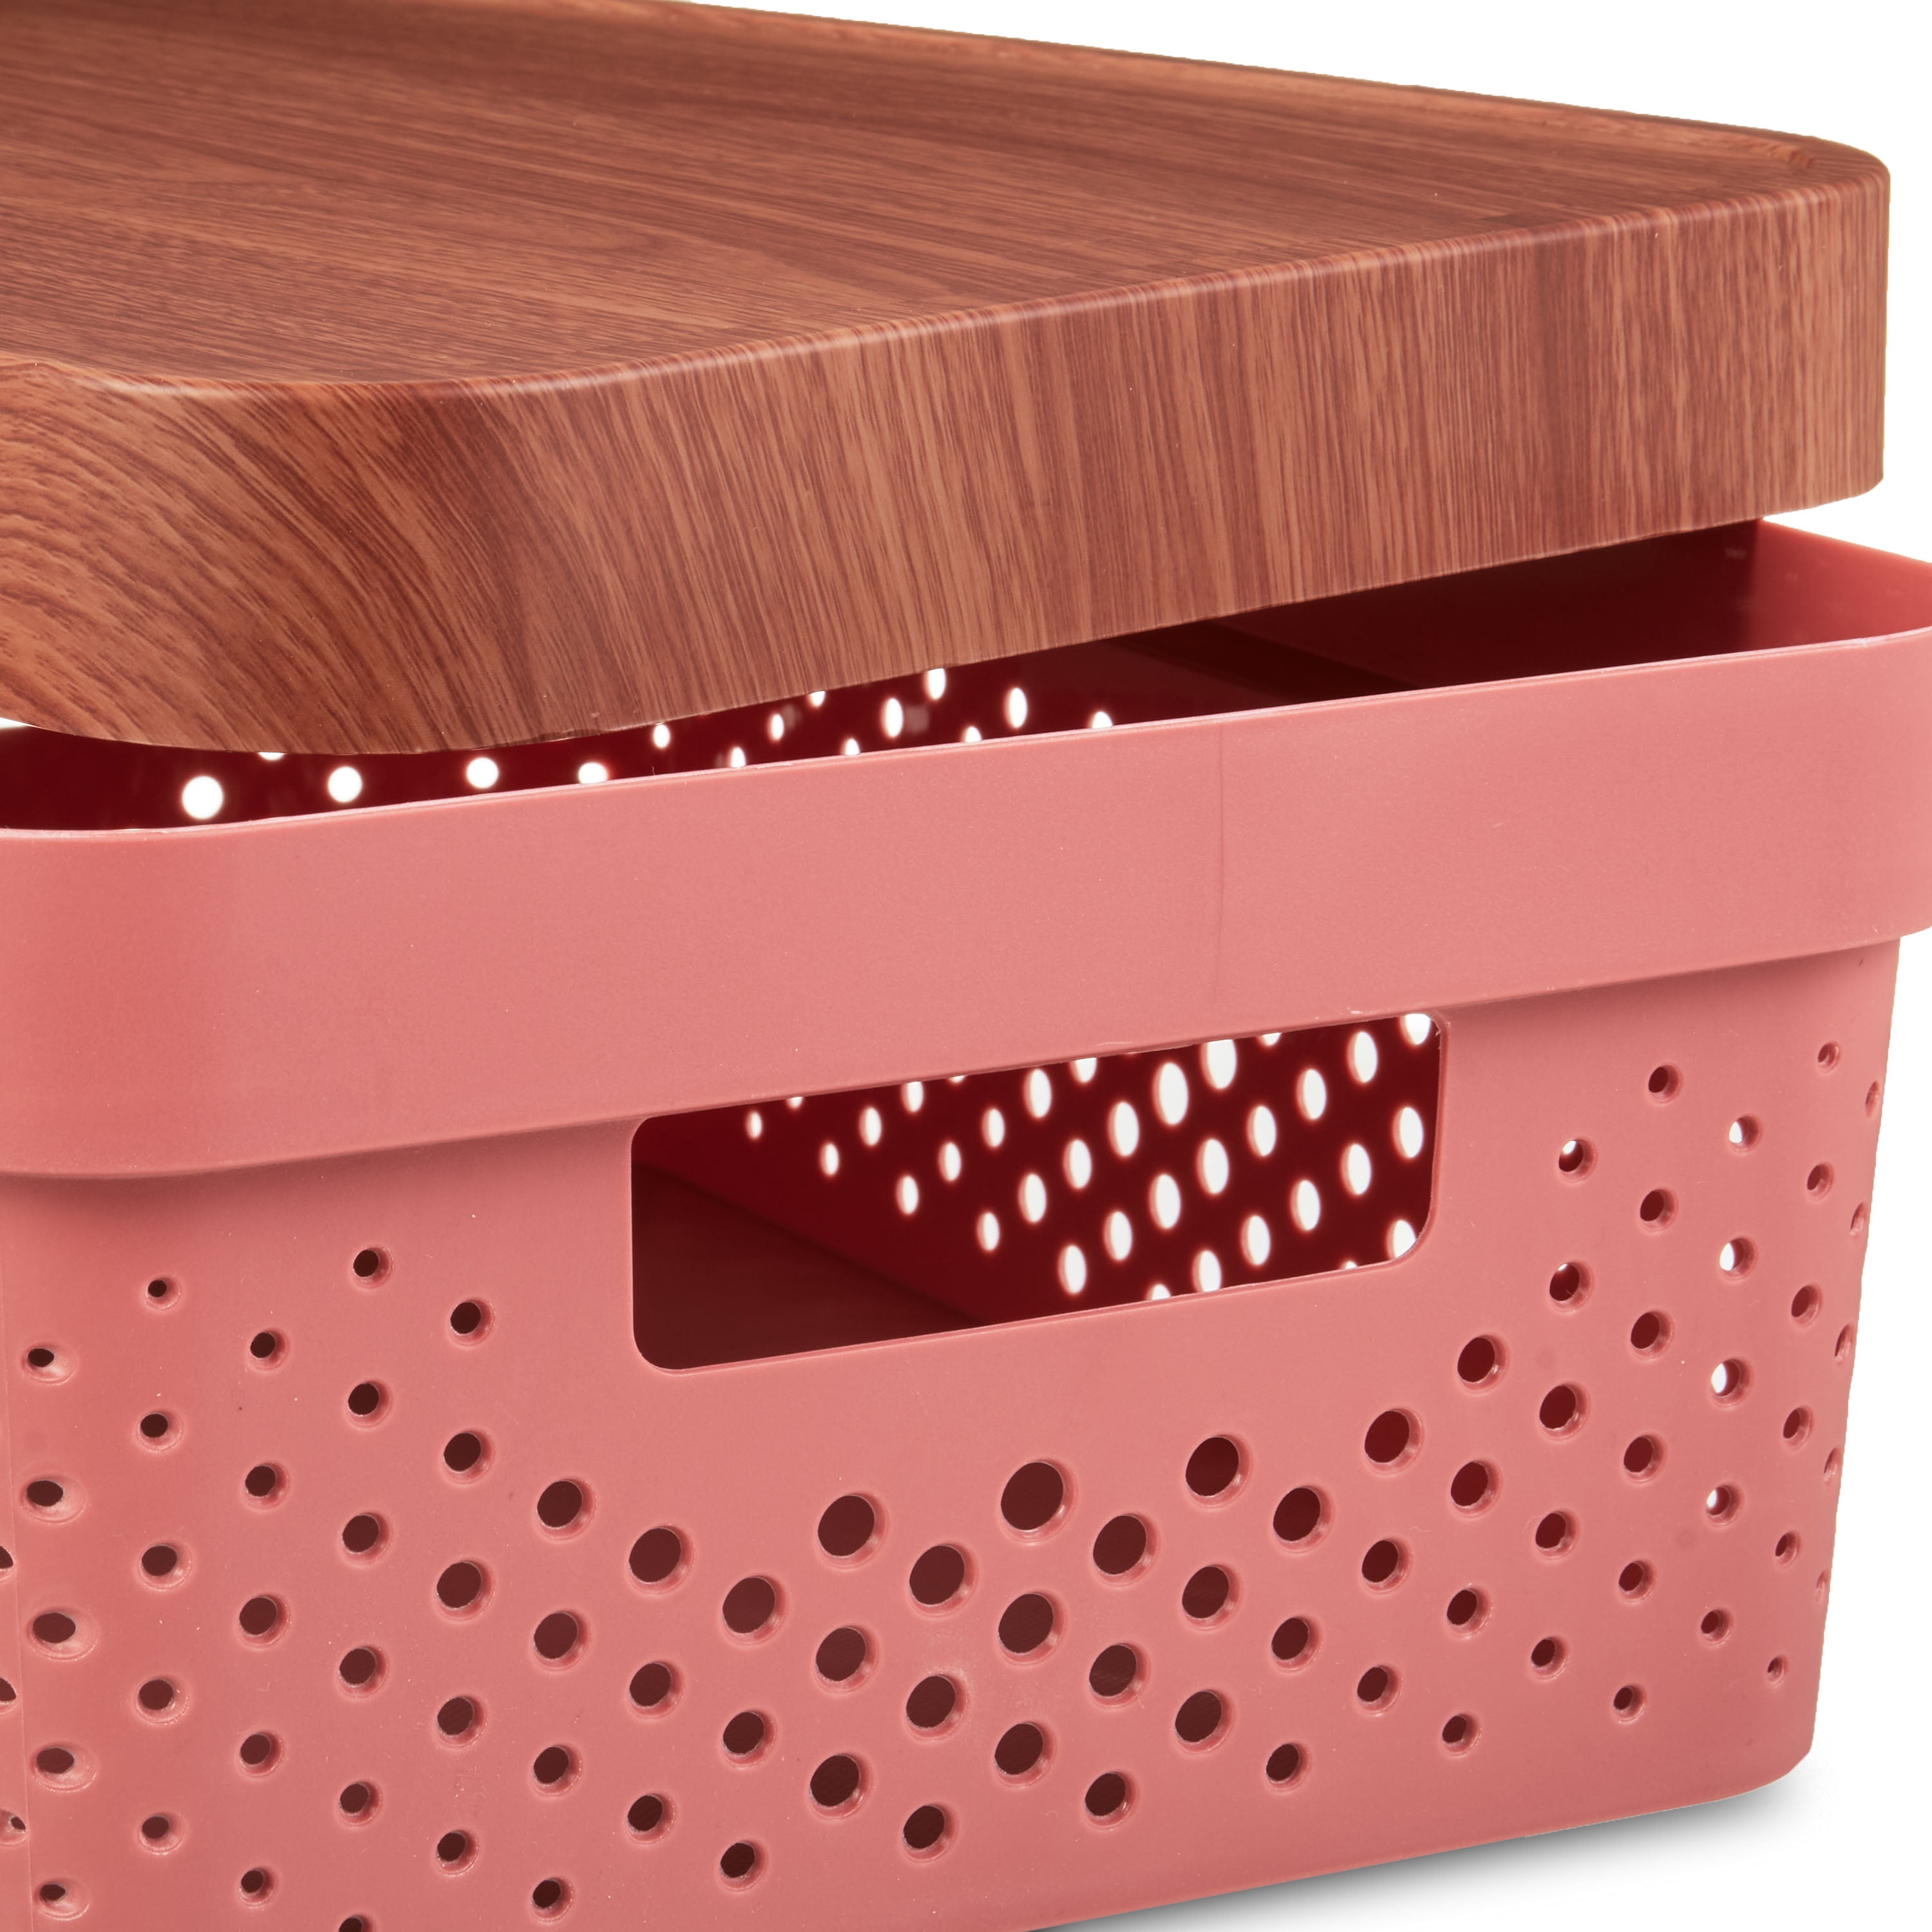 Pen+Gear Organizational Storage Box with Woodgrain Pattern Lid, Clear 